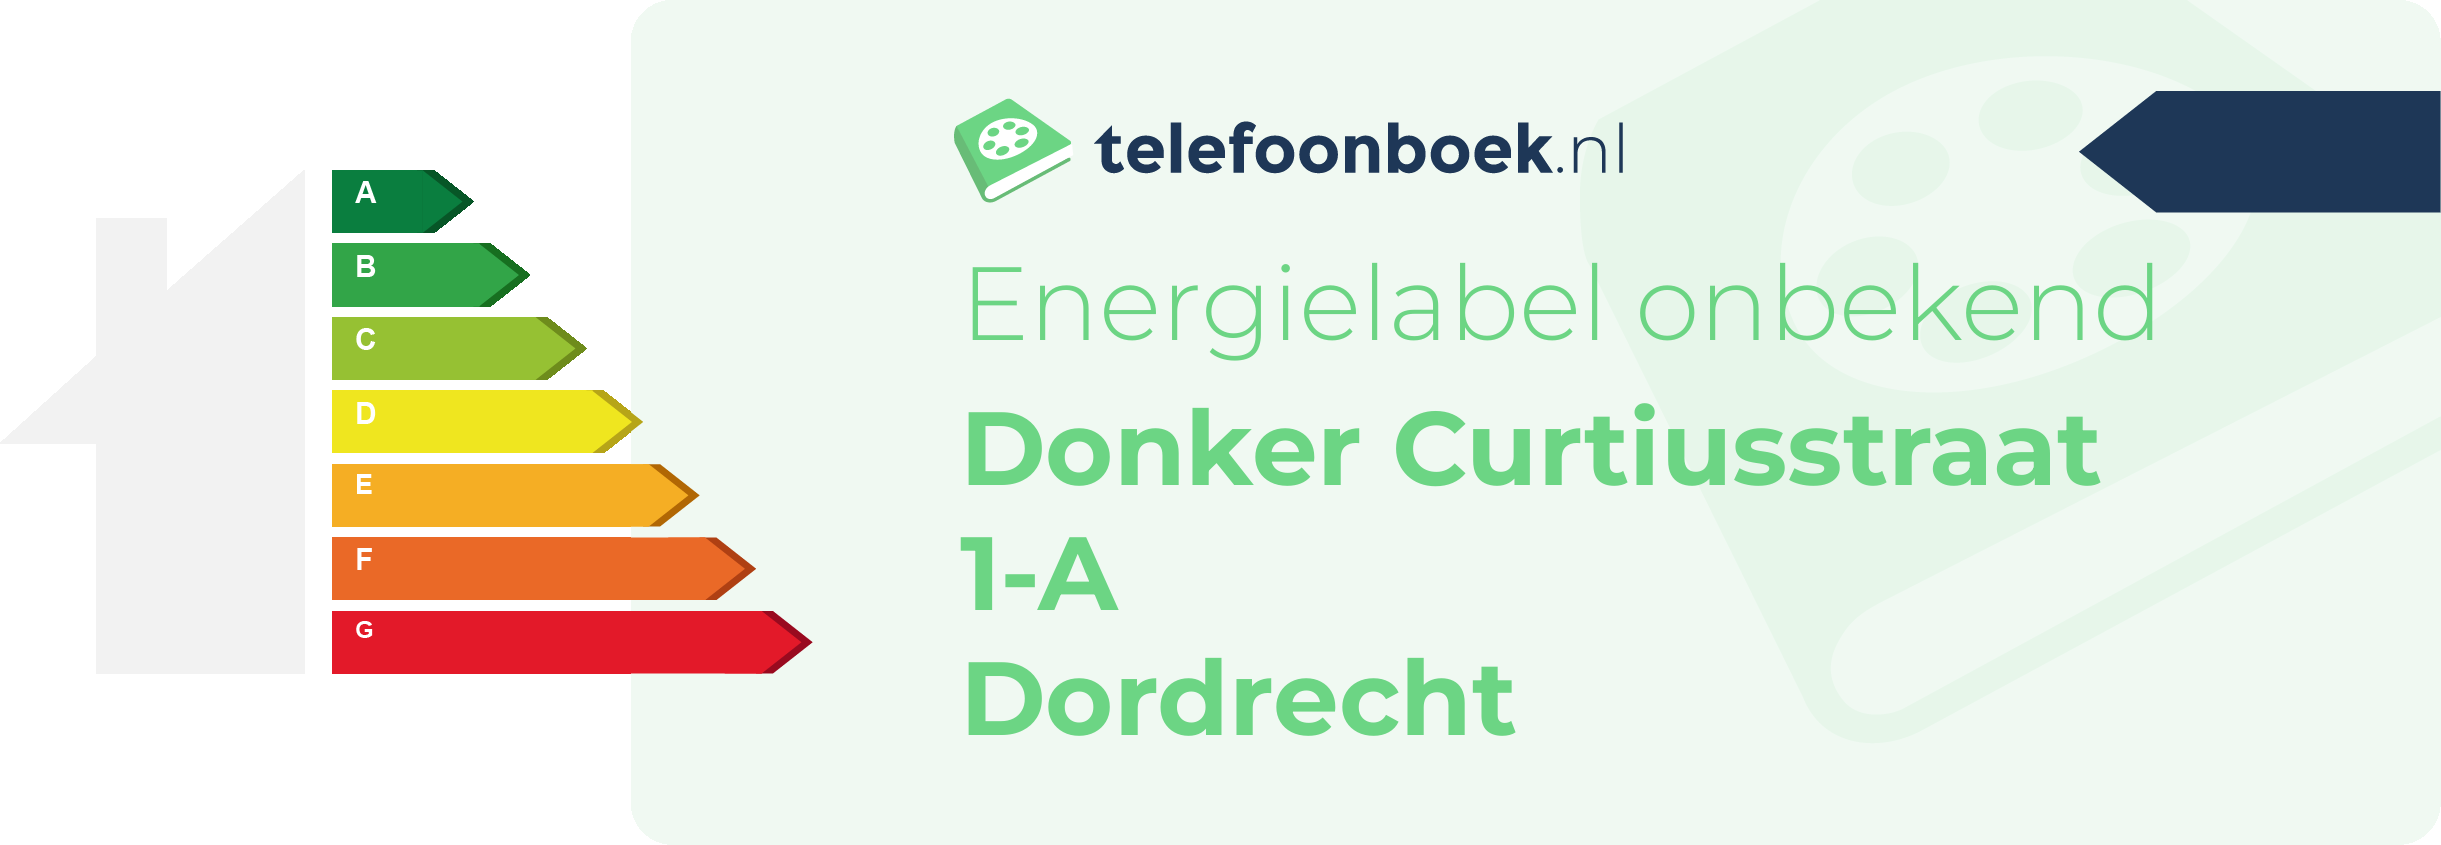 Energielabel Donker Curtiusstraat 1-A Dordrecht